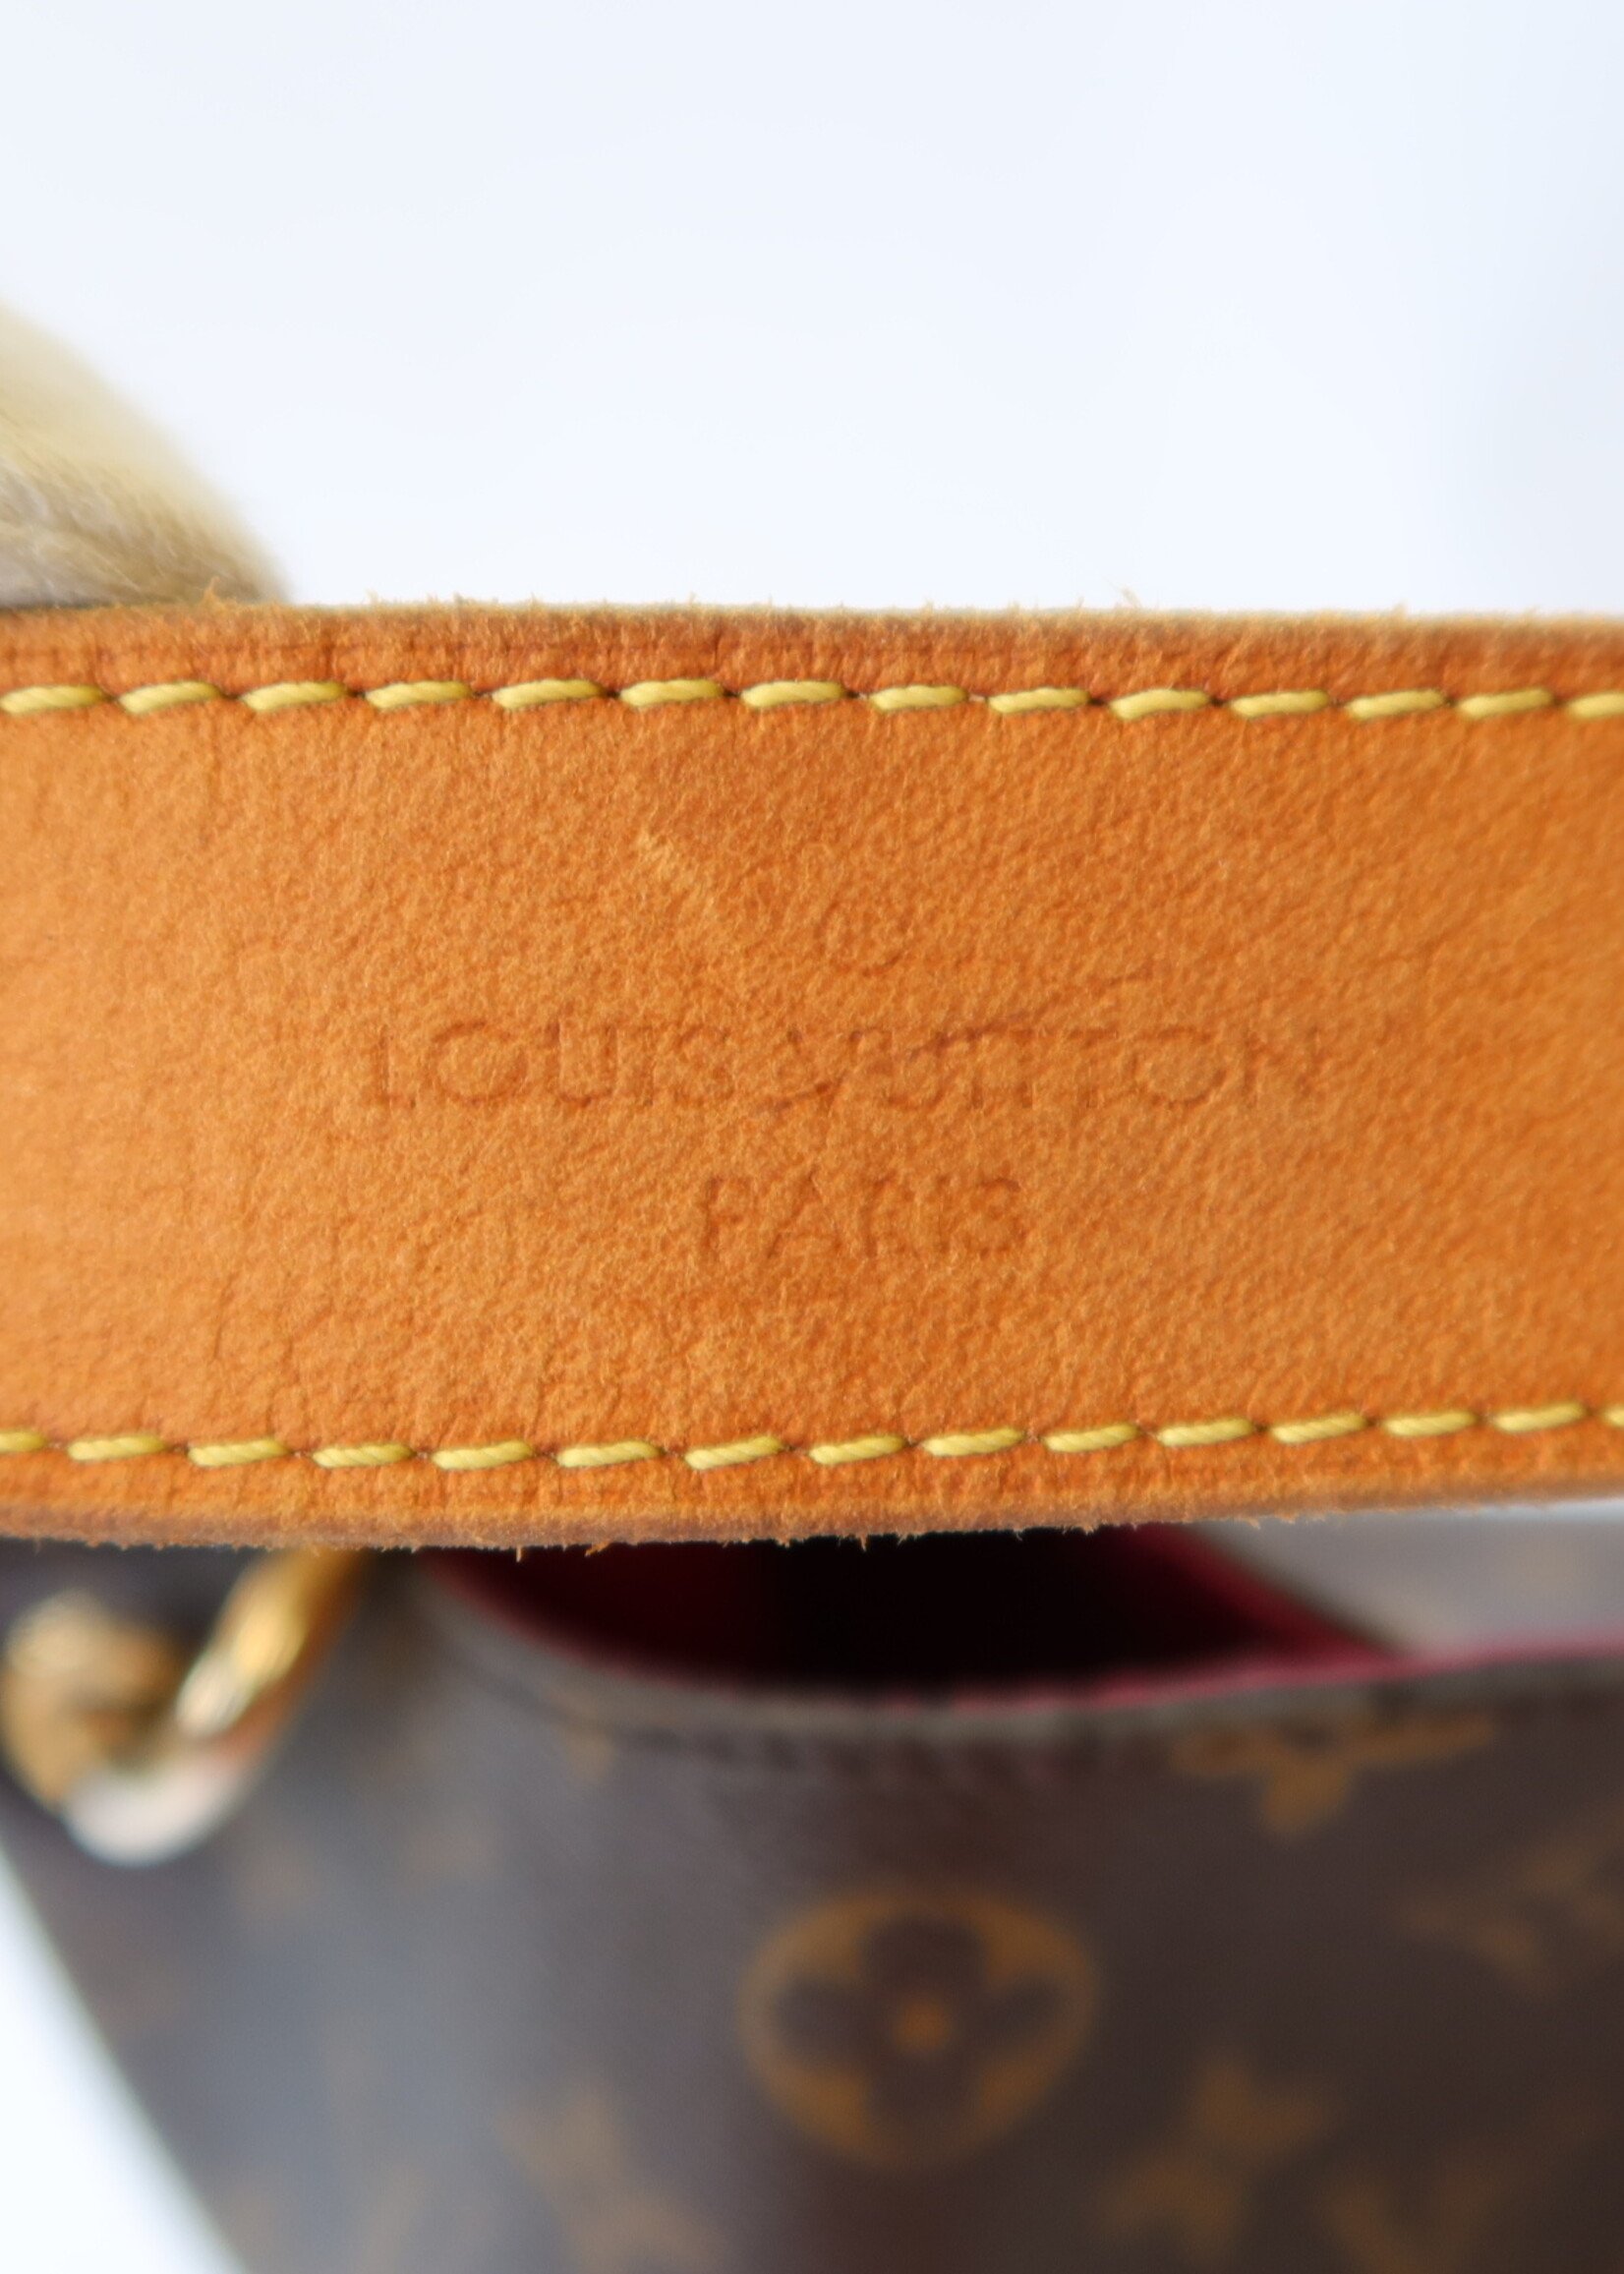 Louis Vuitton Monogram Graceful MM